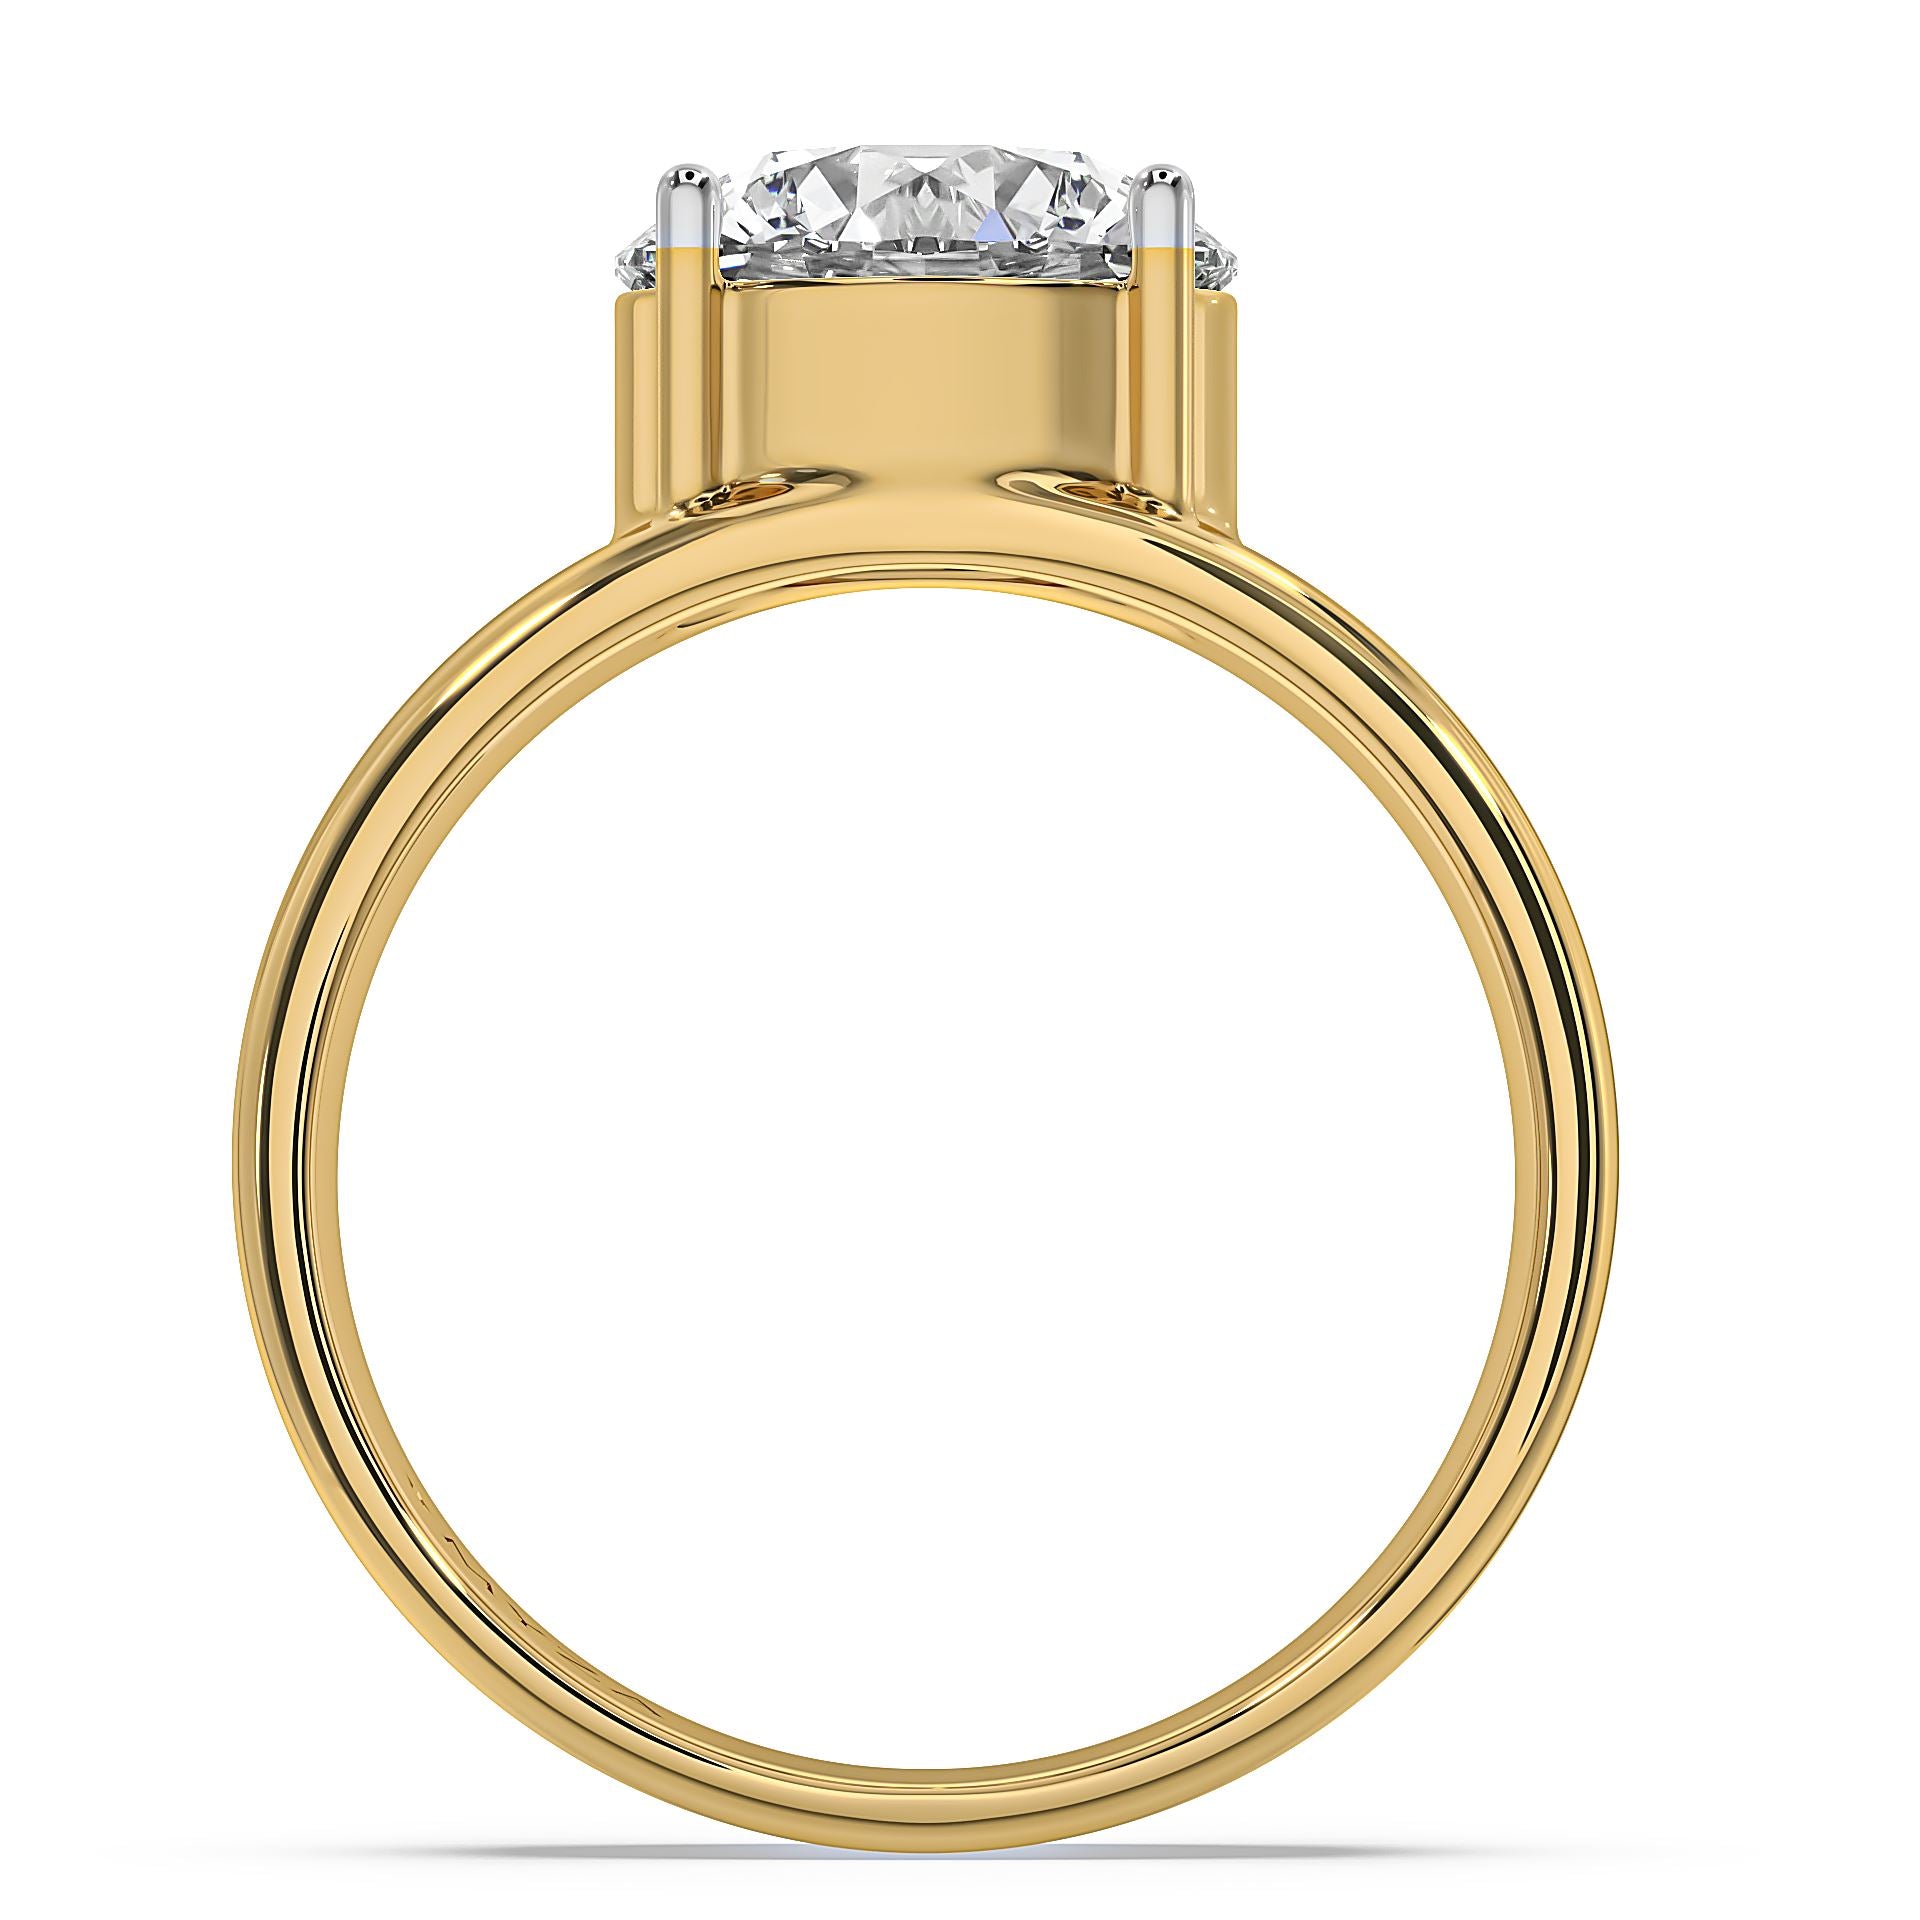 Myza 4-Carat Hallmark Gold Men's Ring- Affordable Luxury, Symbol of Love - Lab-Grown Diamonds, Lab-Made, Elegance for Gifting